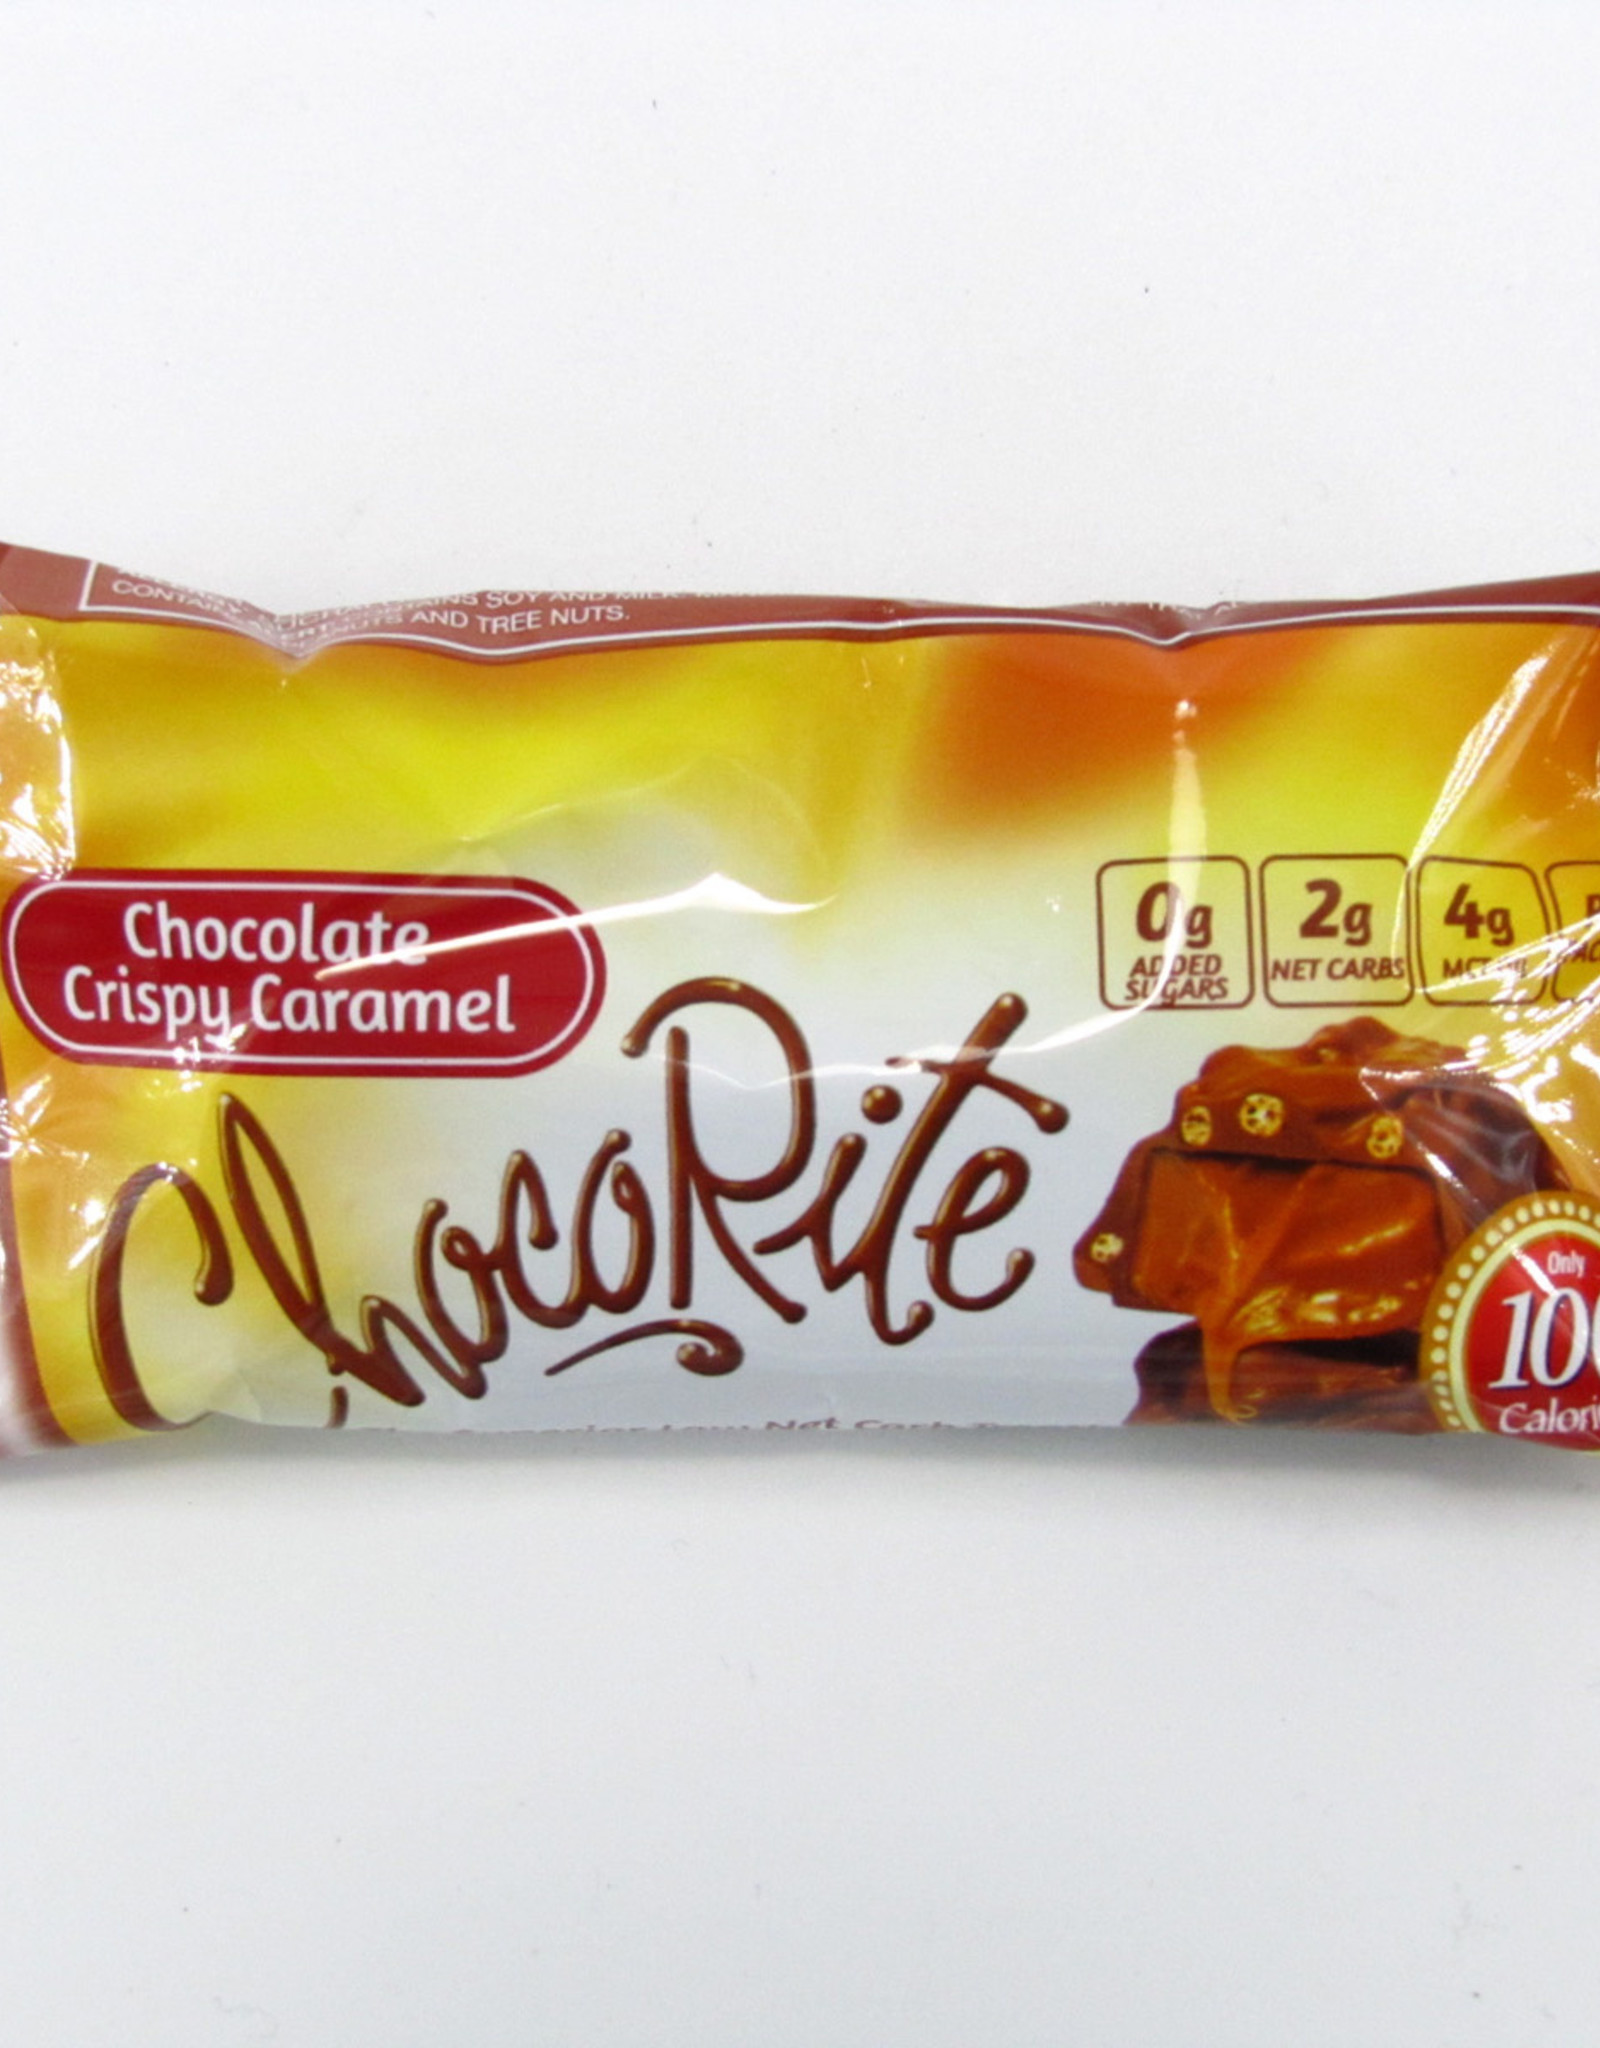 ChocoRite ChocoRite Single Choc Crispy Caramel